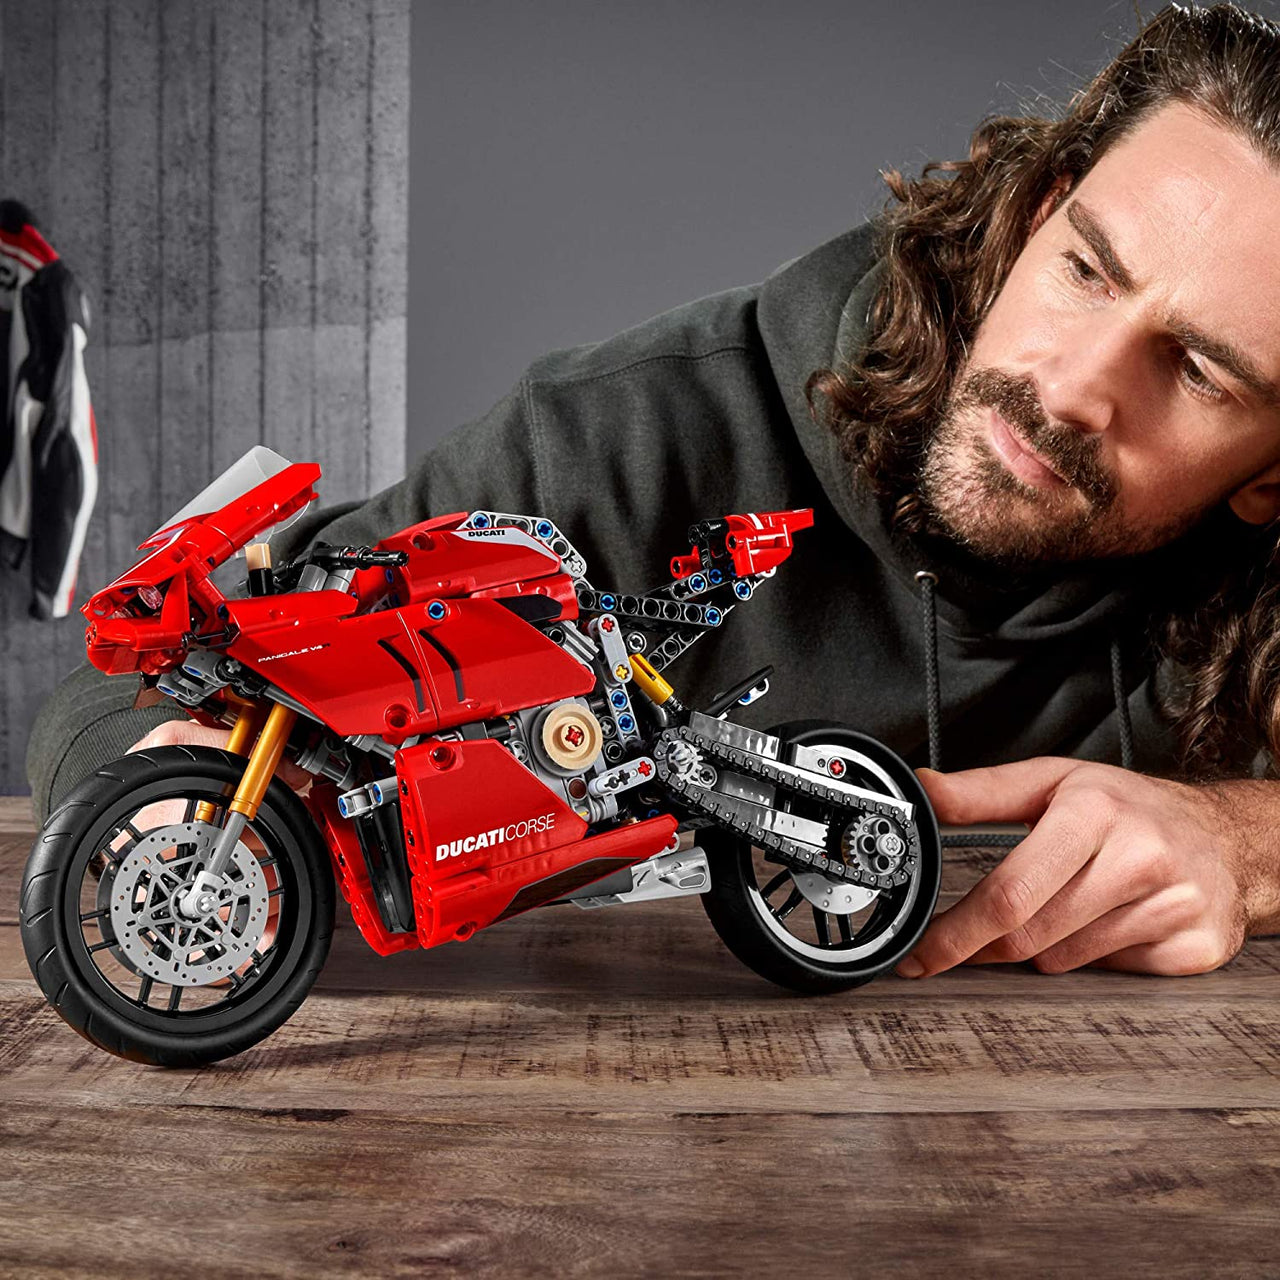 42107 LEGO Technic Motocicleta Ducati Panigale V4 R (646 Piezas) - CAT SERVICE PERU S.A.C.